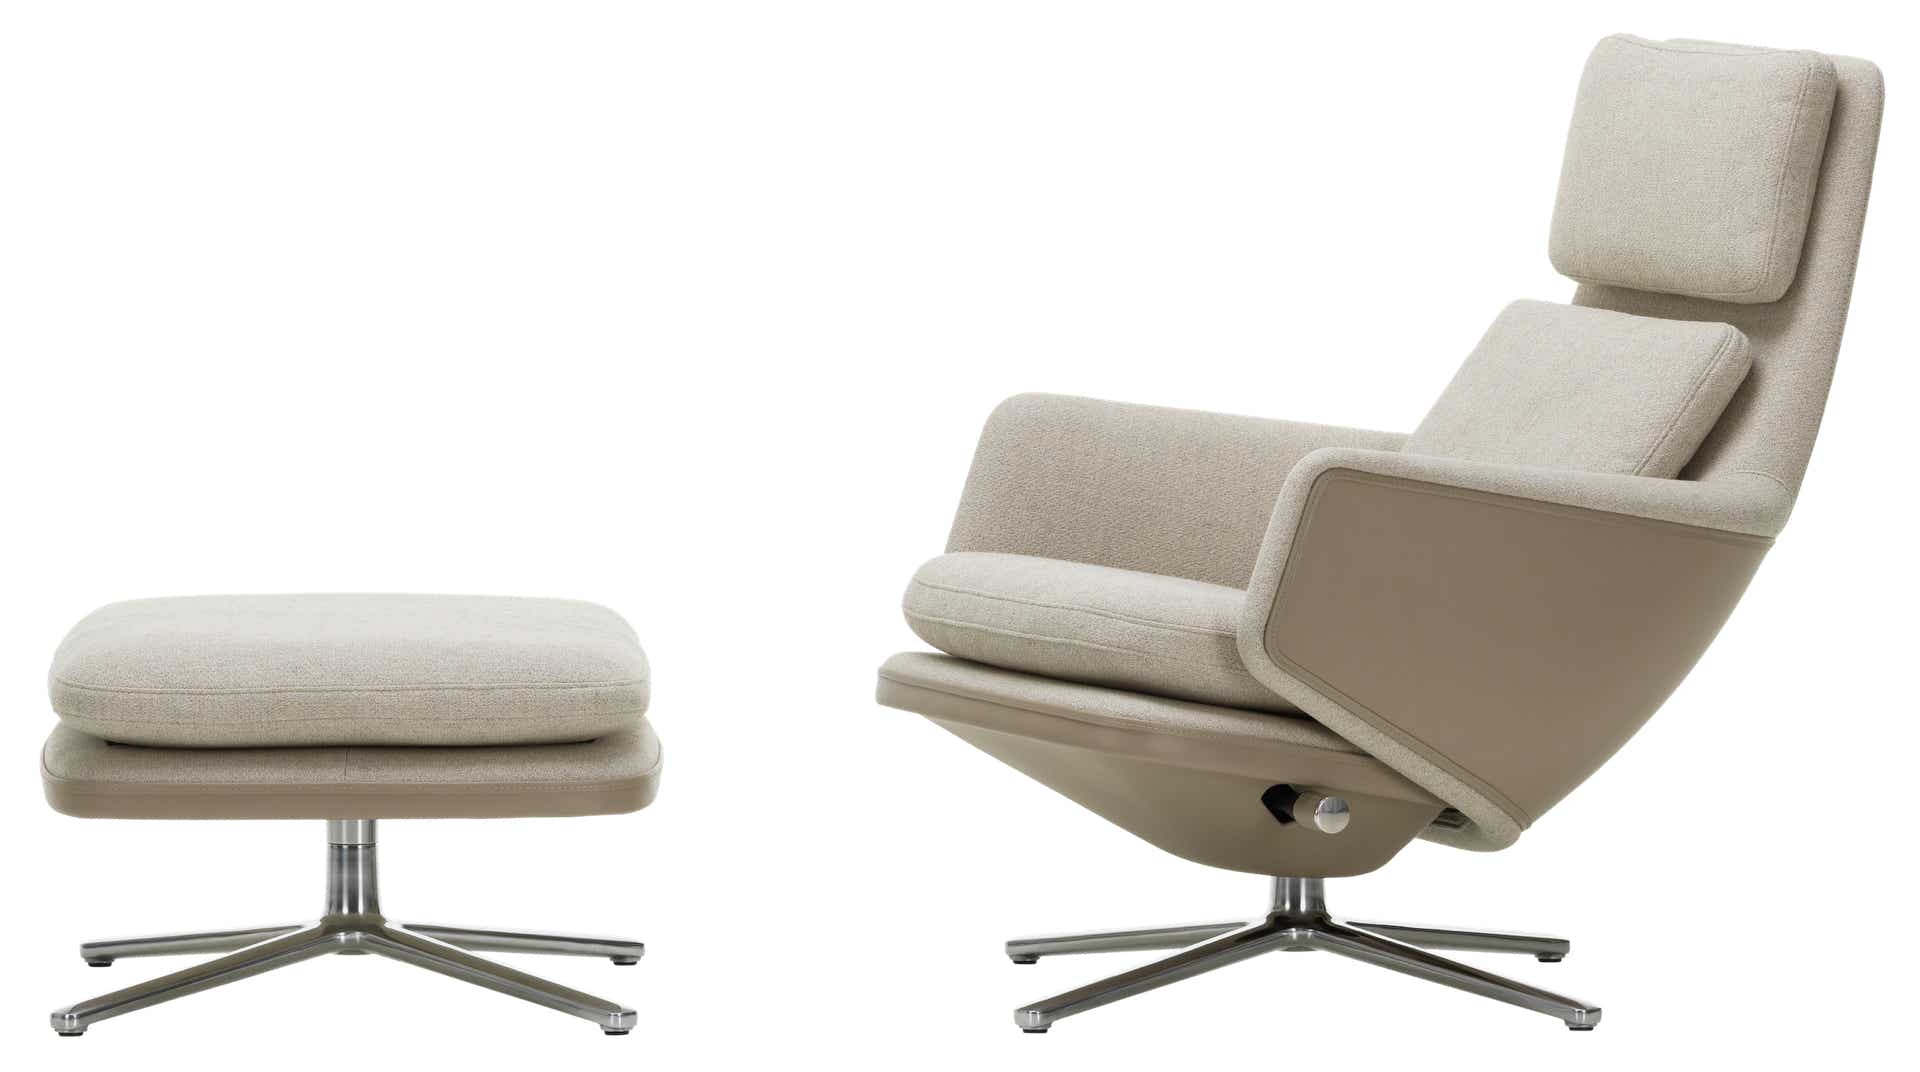 Grand Relax lounge chair Antonio Citterio, 2019